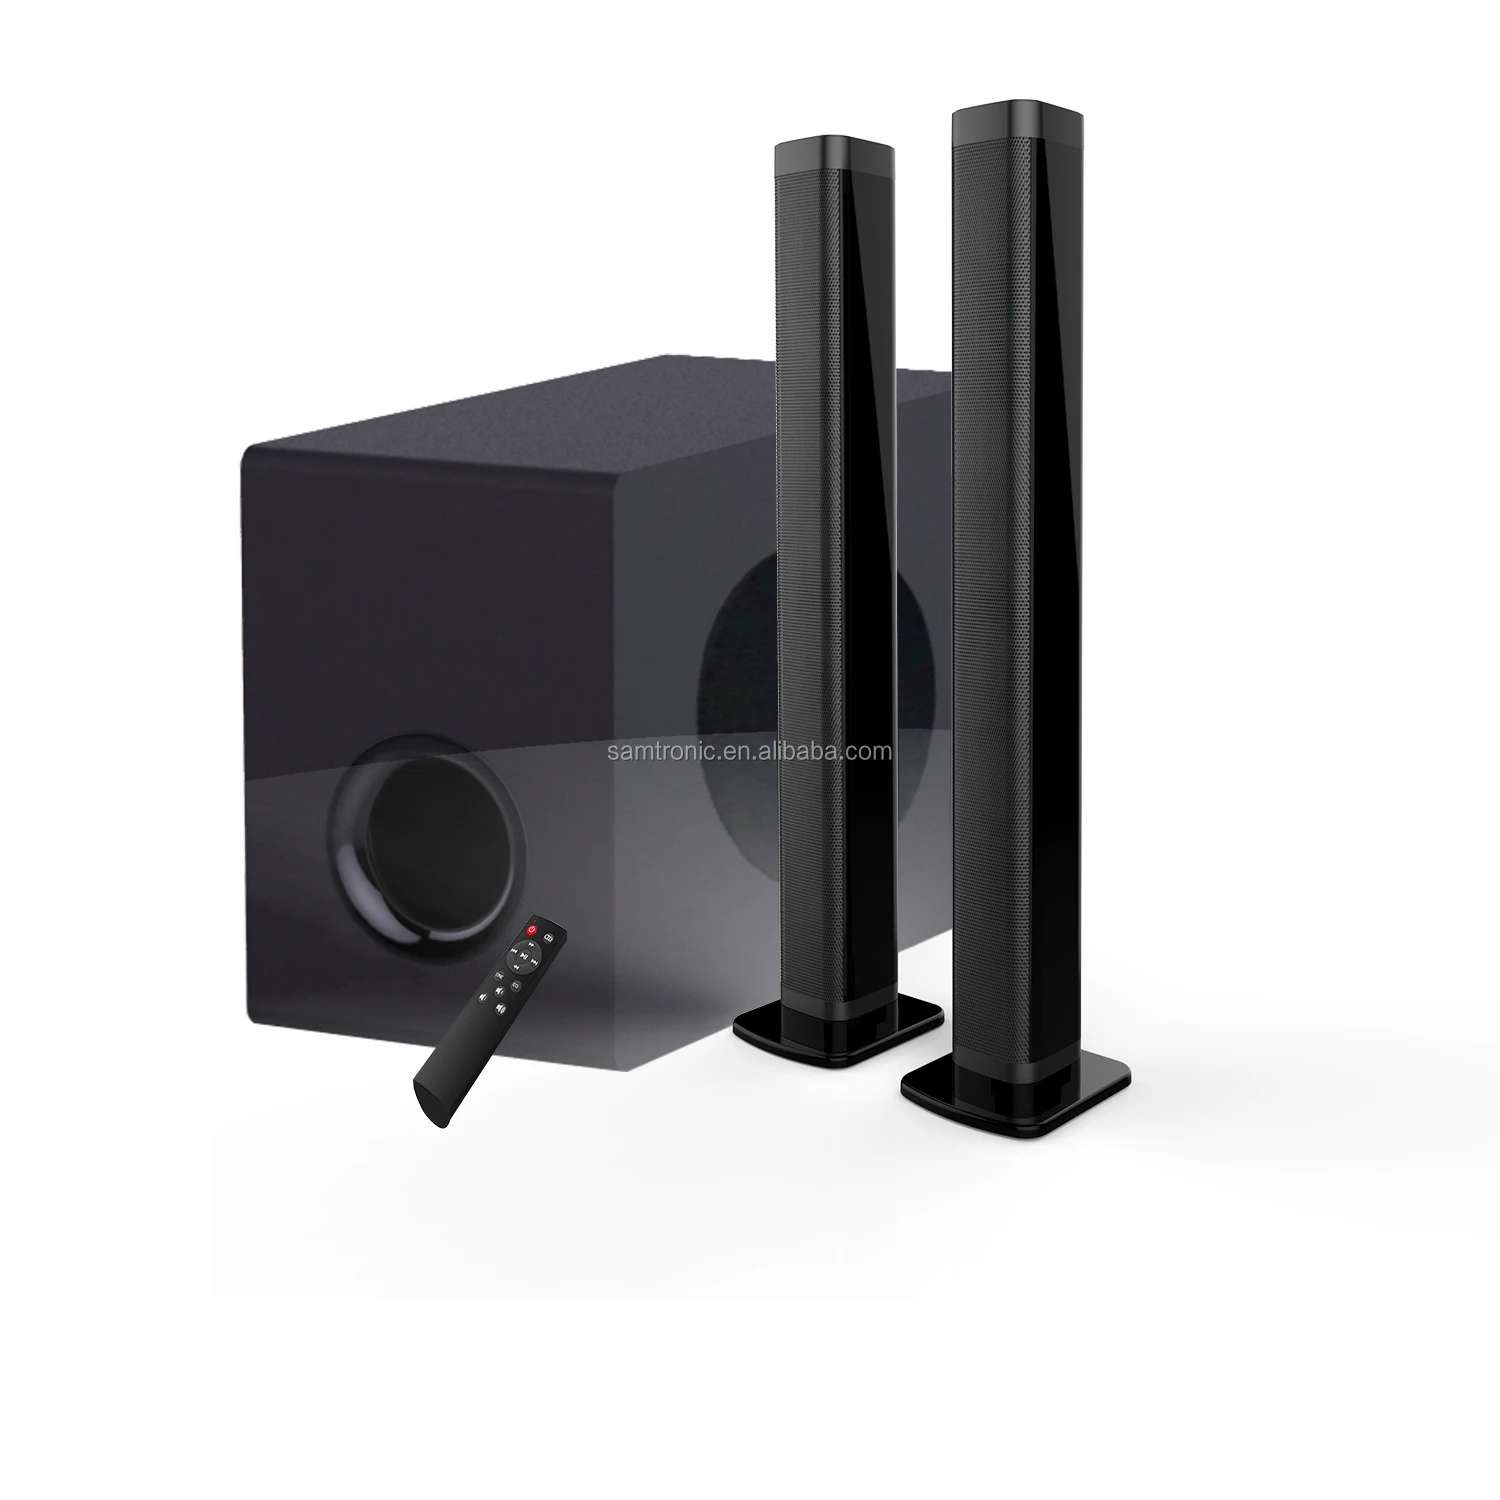 

Samtronic 100W 2.1ch Detachable soundbar, wireless sound bar speaker for tv for 2023 hot sale online home theatre system